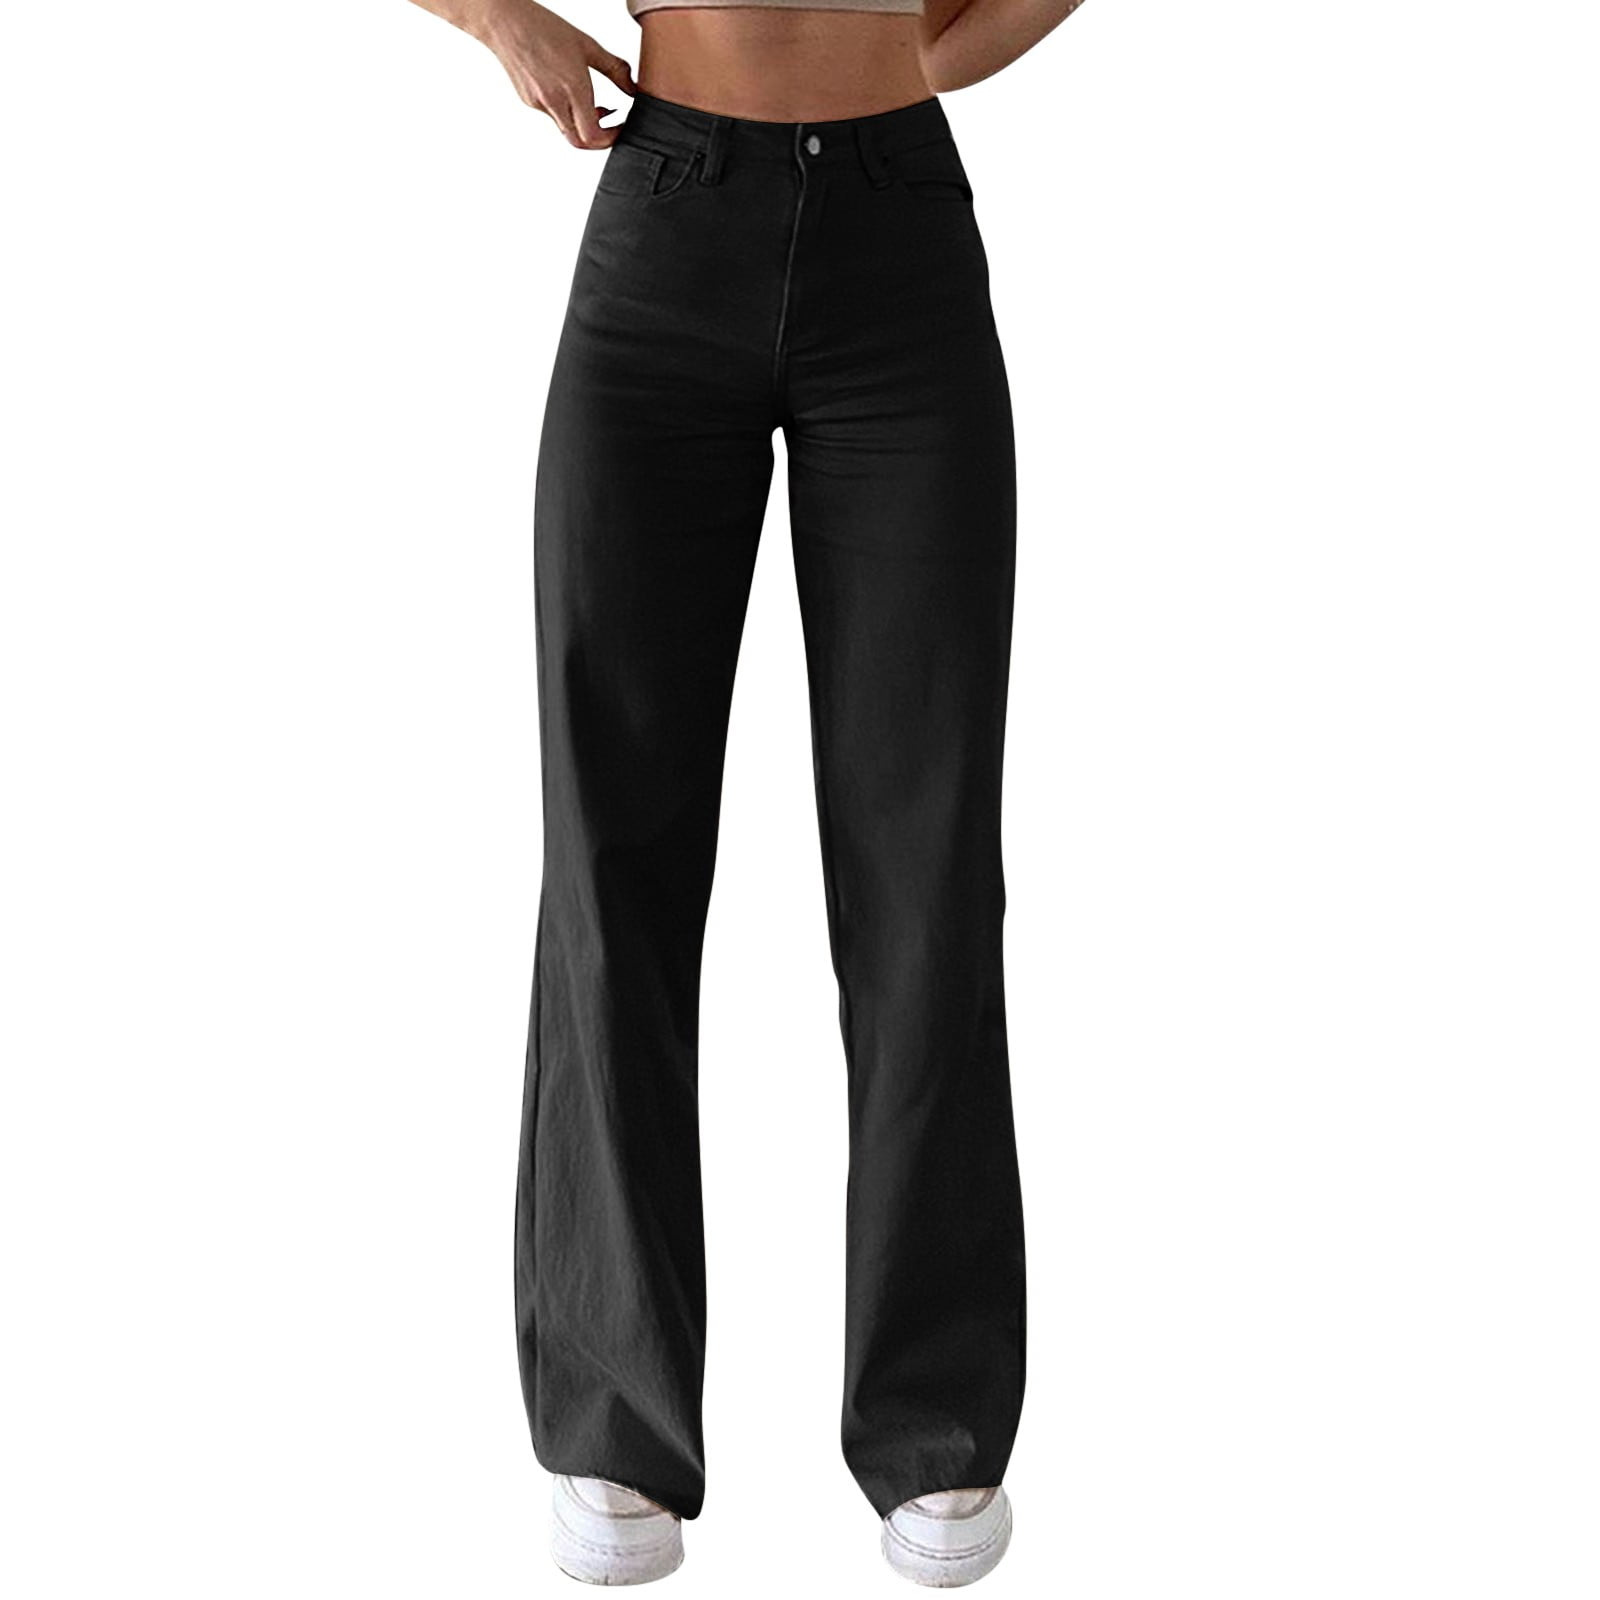 zuwimk Wide Leg Pants For Women,Women's Slim Comfort Fit Ponte Dress Pants  Khaki,XL 